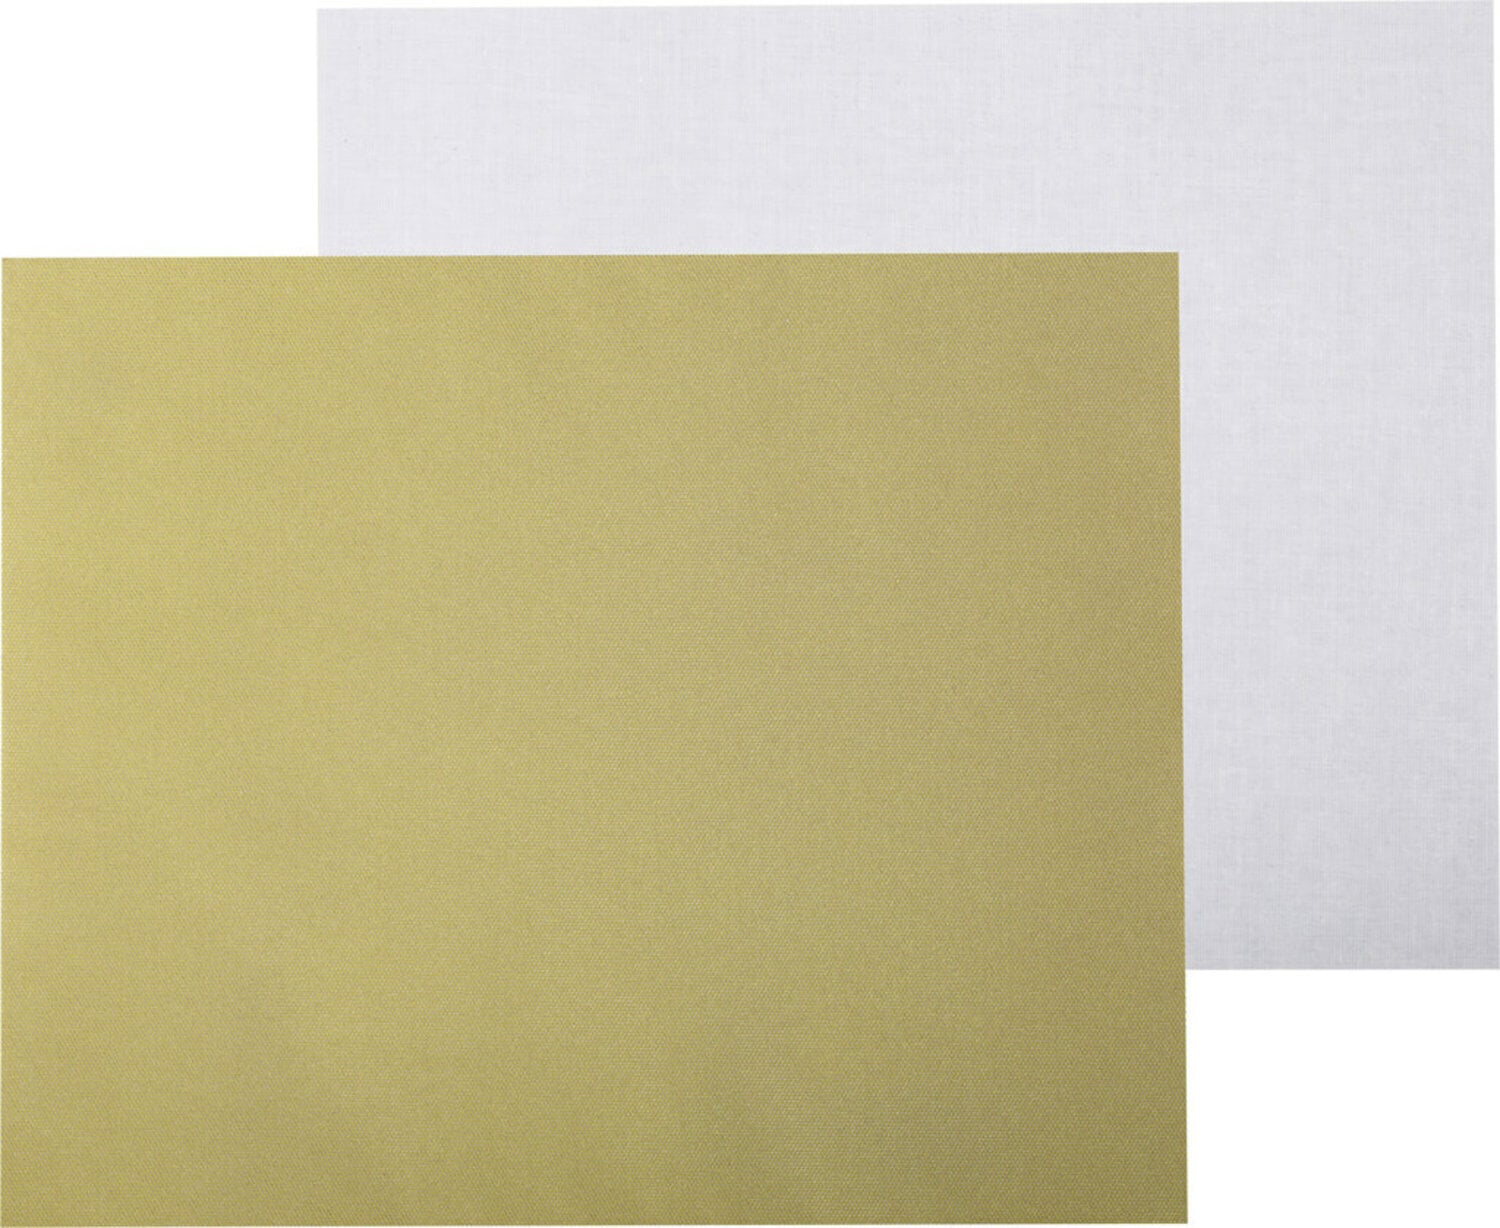 7010534082 - 3M Flexible Diamond Cloth Sheet 6001J, M40, Pattern 18, Yellow, 3 in x
6 in